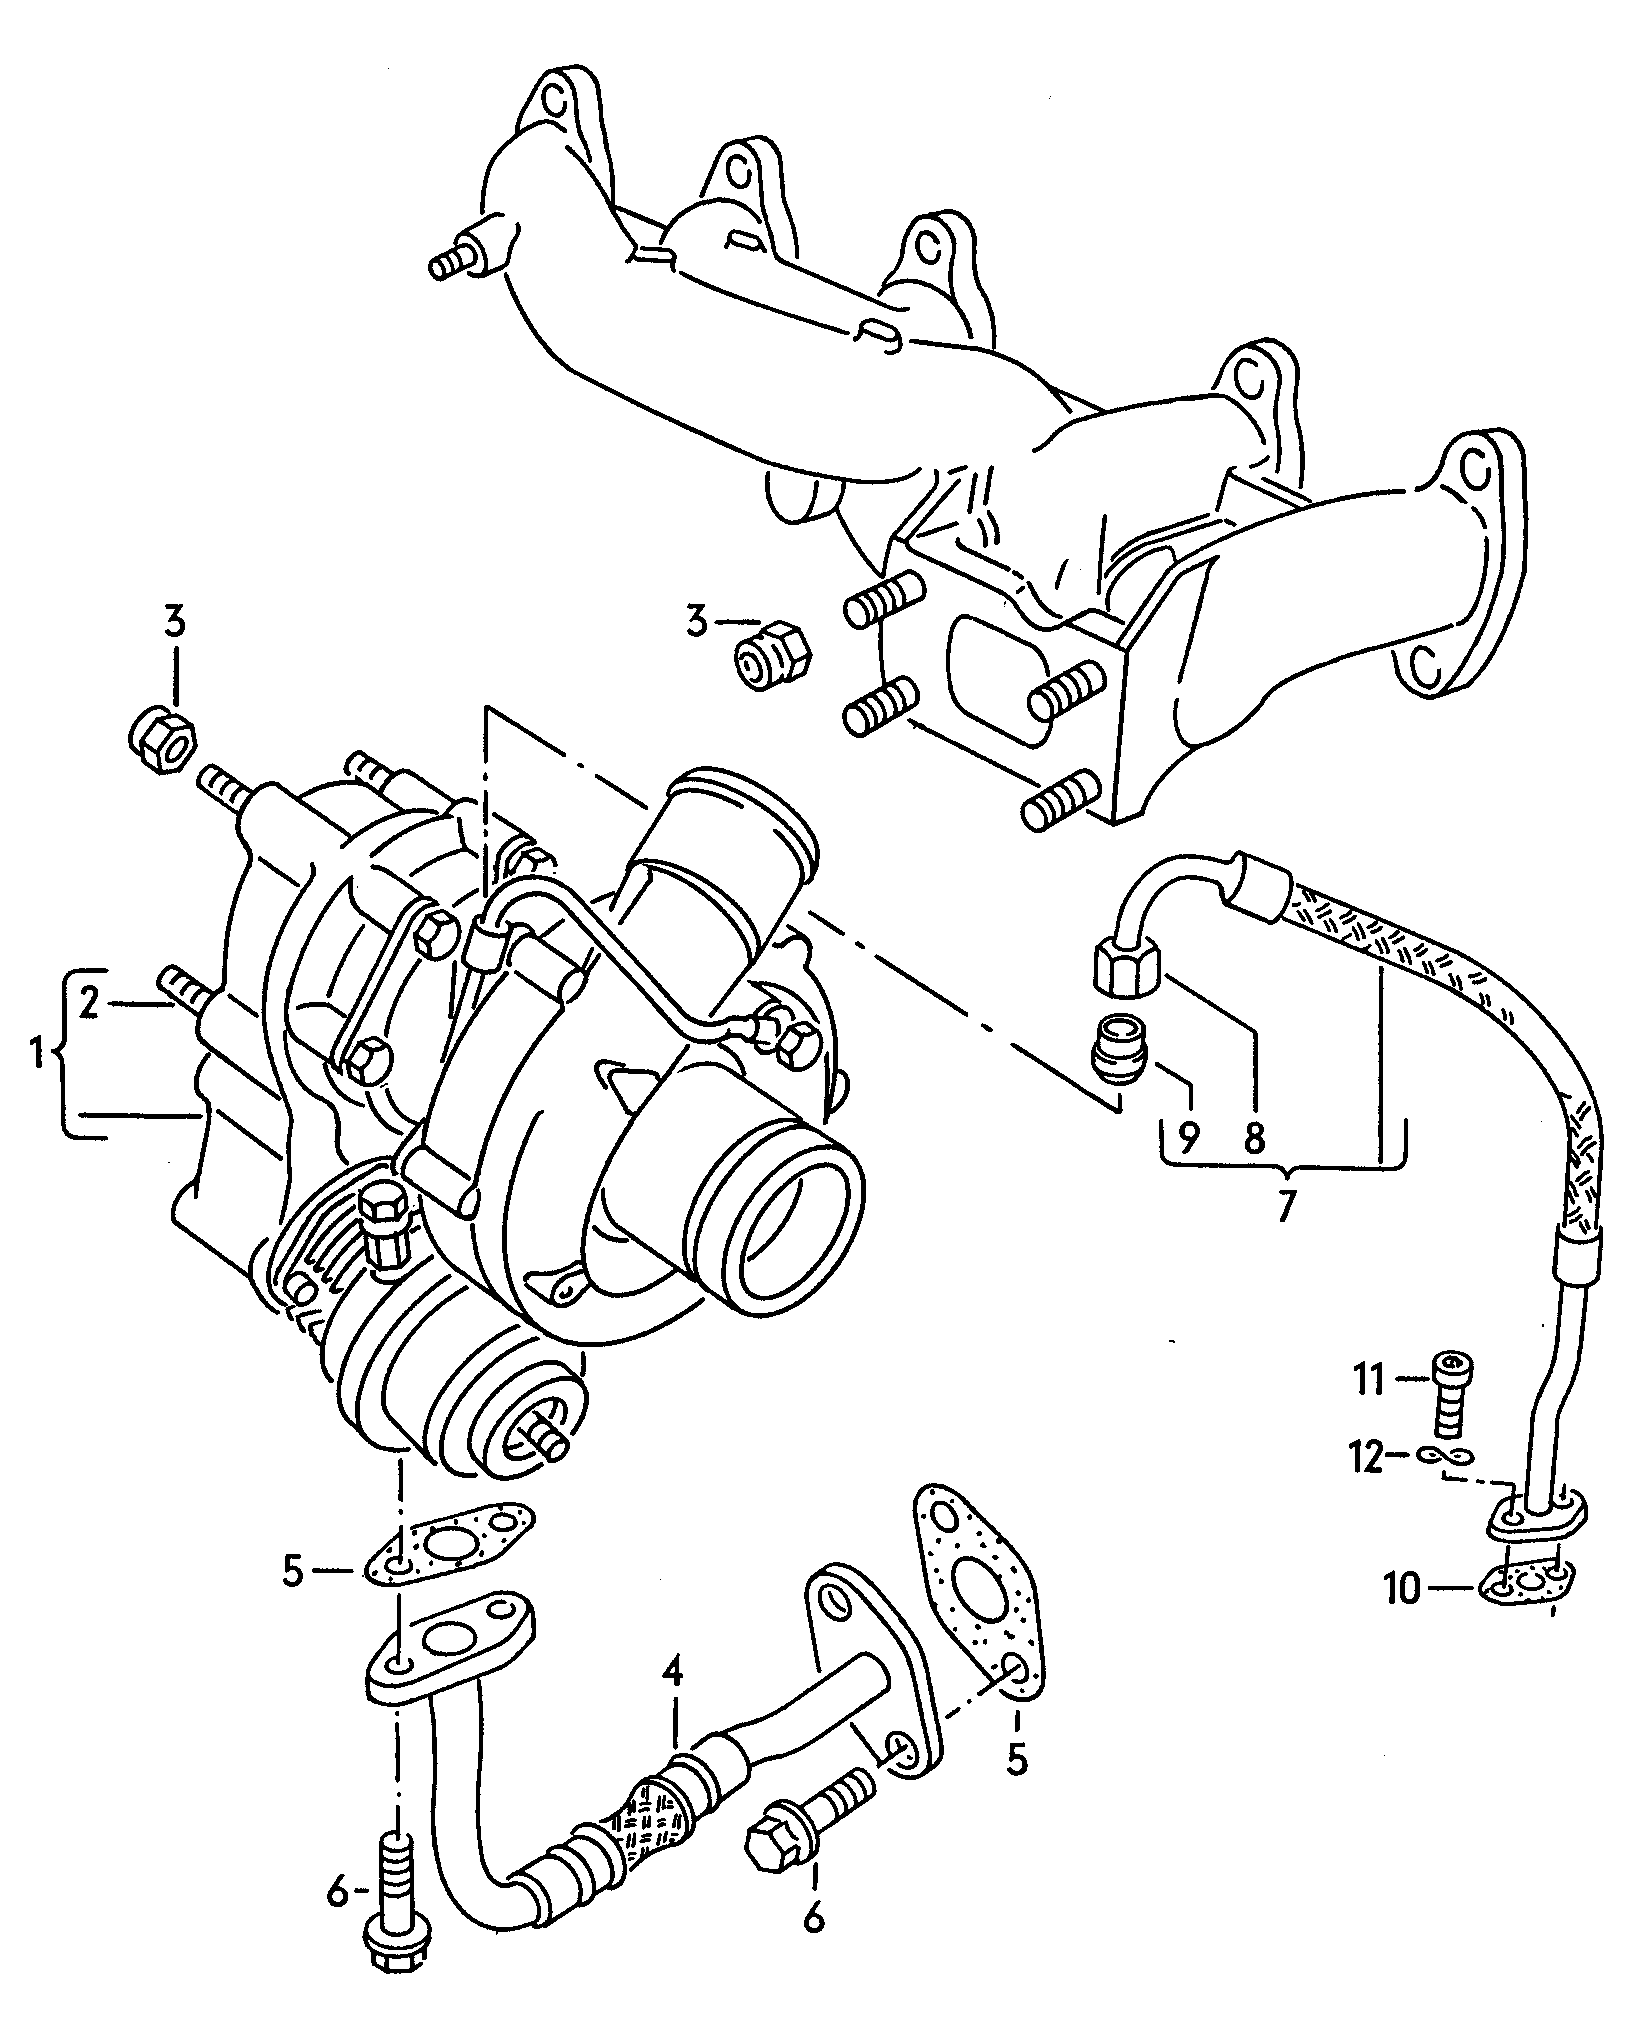 Turbocompresseur a gaz dech. 2,0l - Audi 100/Avant - a100